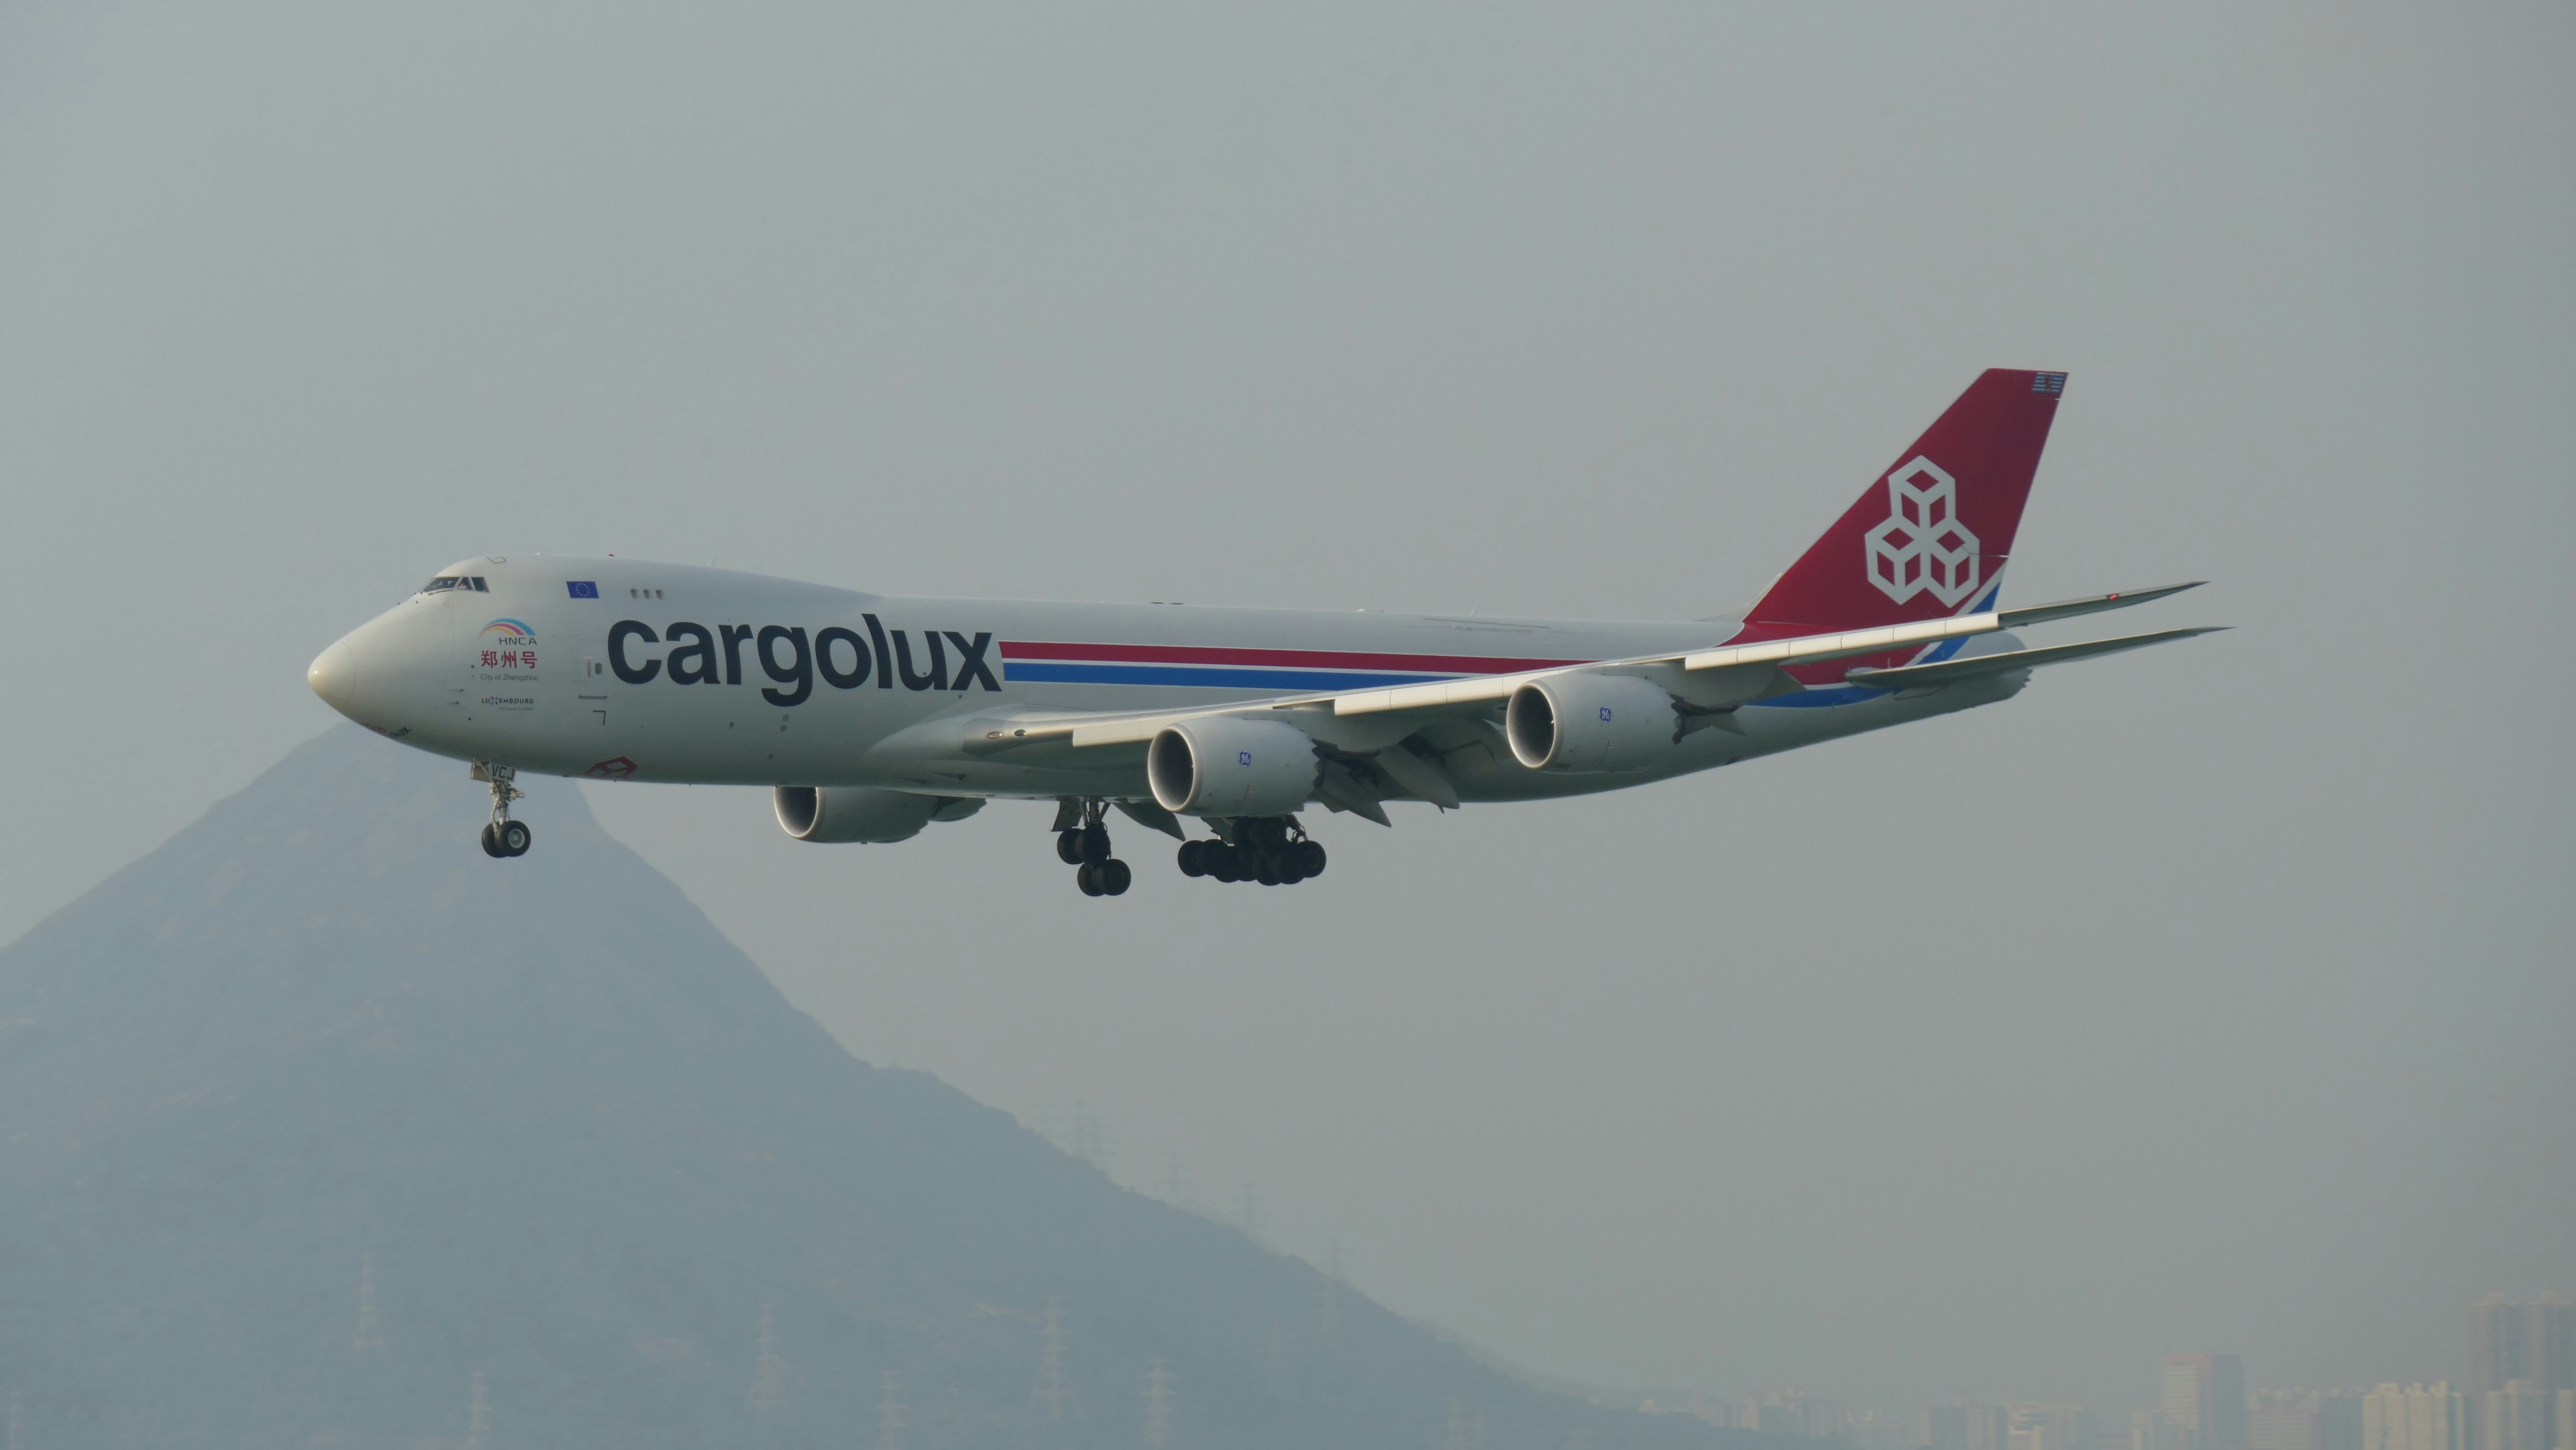 Cargolux 747-8 landing at Hong Kong International Airport